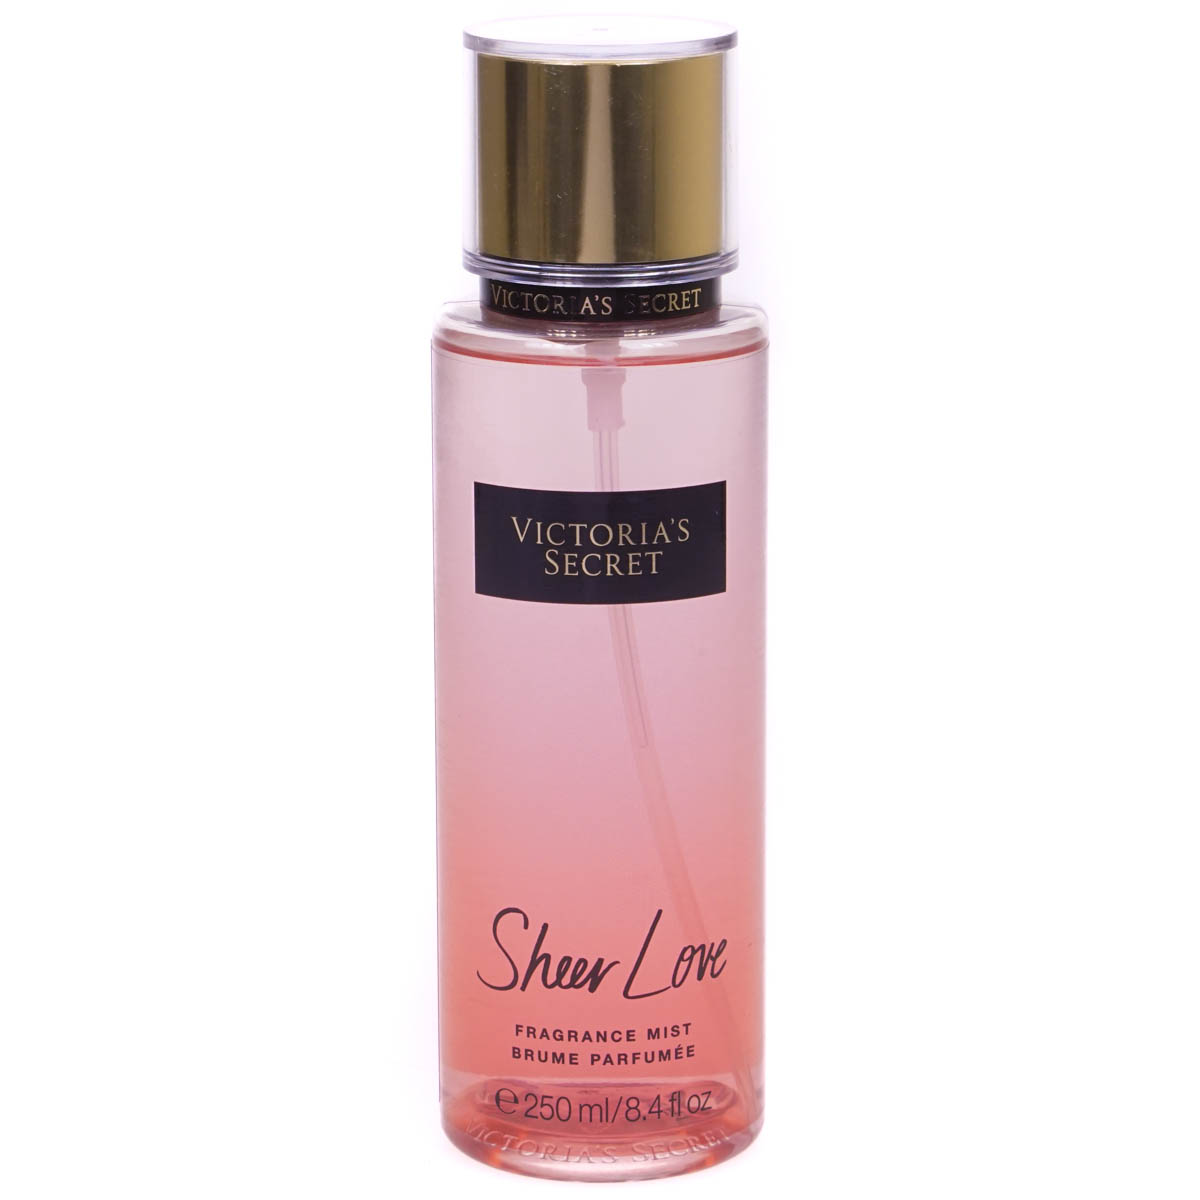 Victoria's Secret Fragrance Mist 250ml Body Spray New Look | eBay